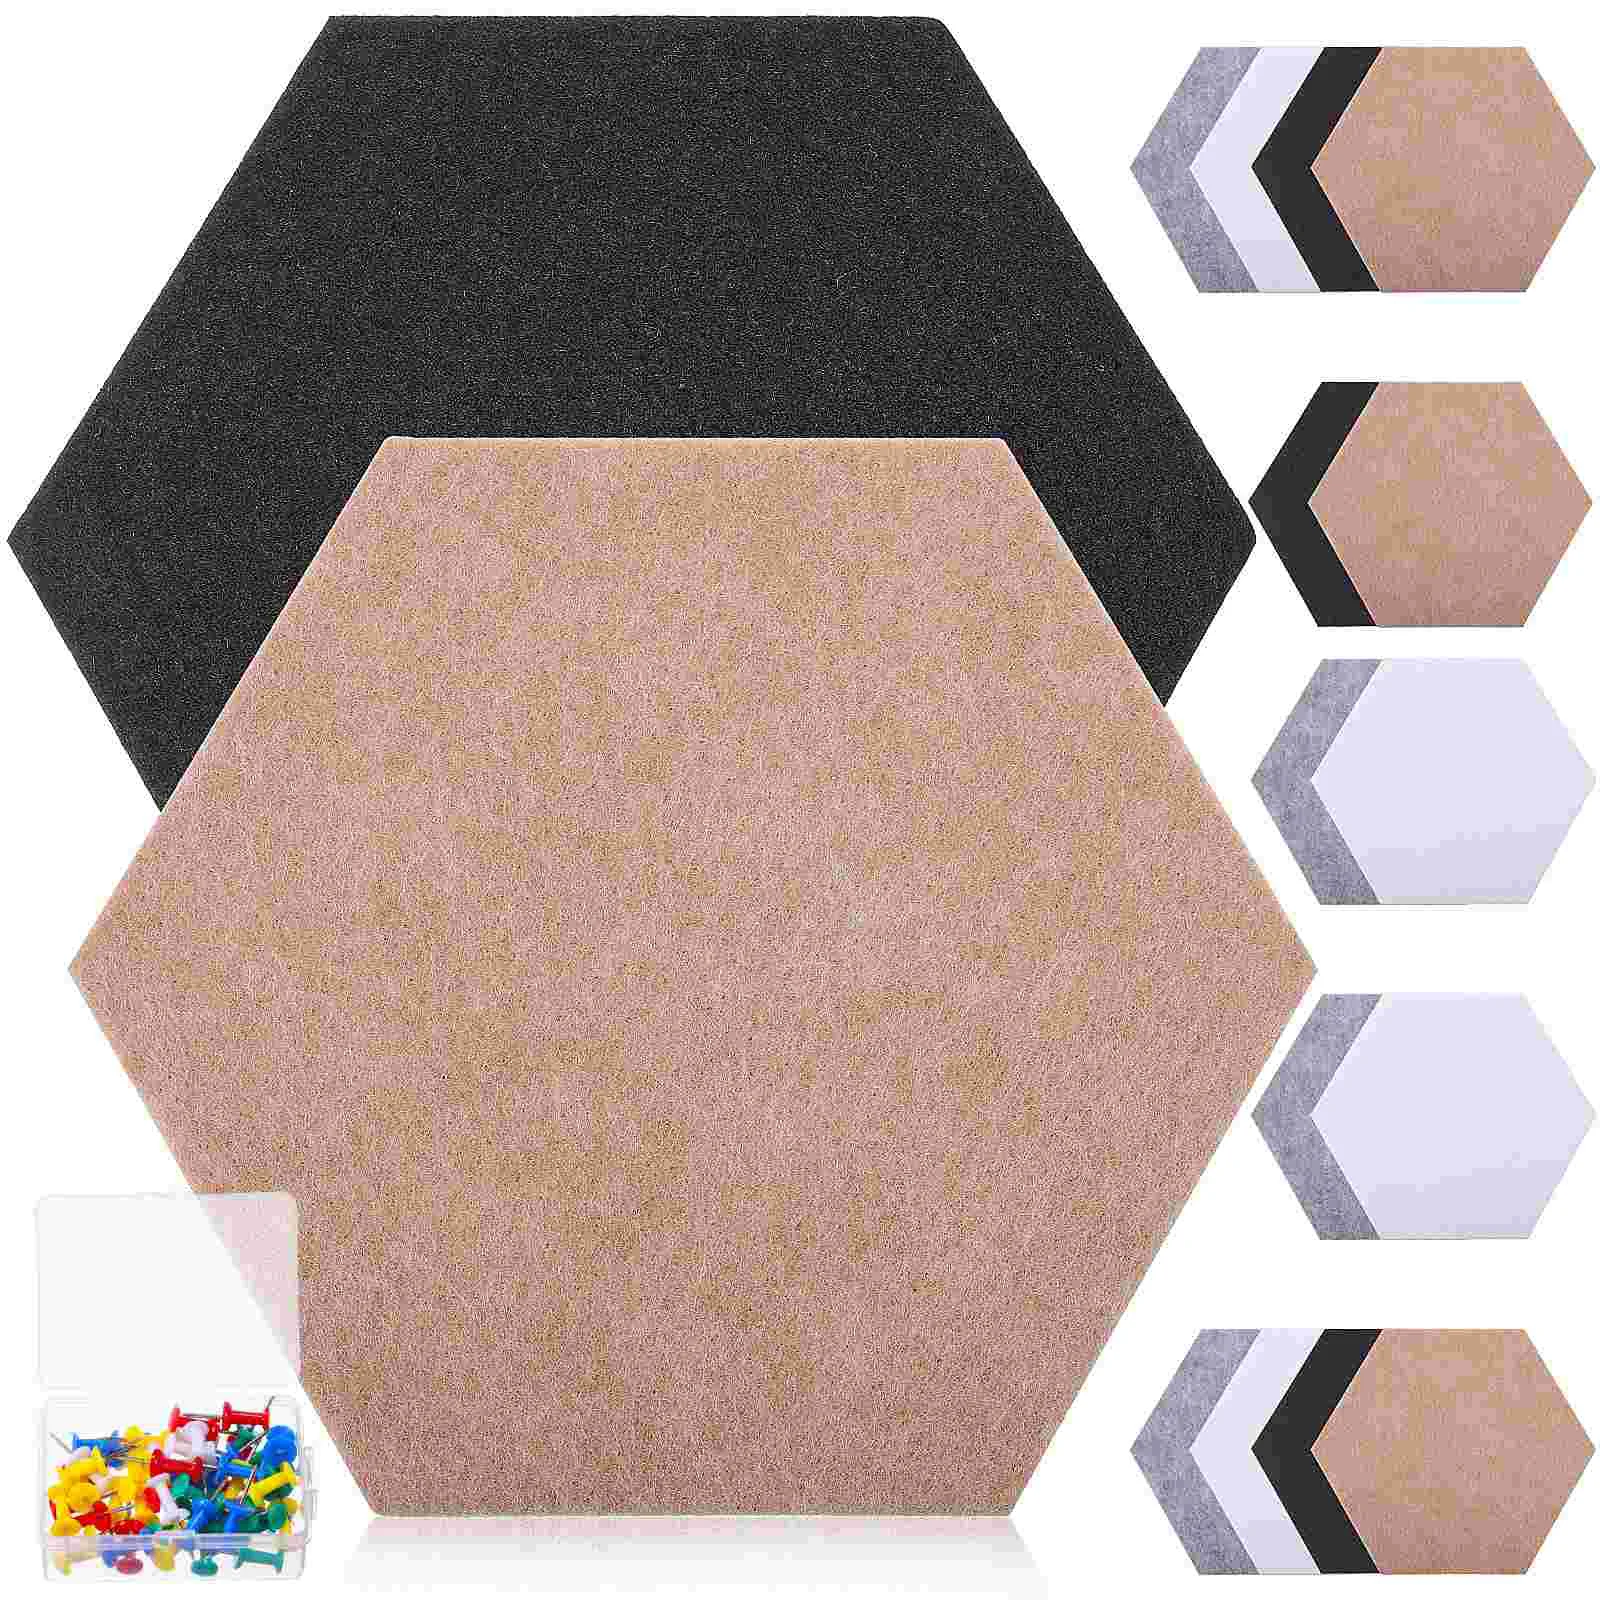 

16 Pcs Colored Felt Board Decorative Boards Cork Bulletin Memo Photo Tiles Hexagon Ties Photos Work